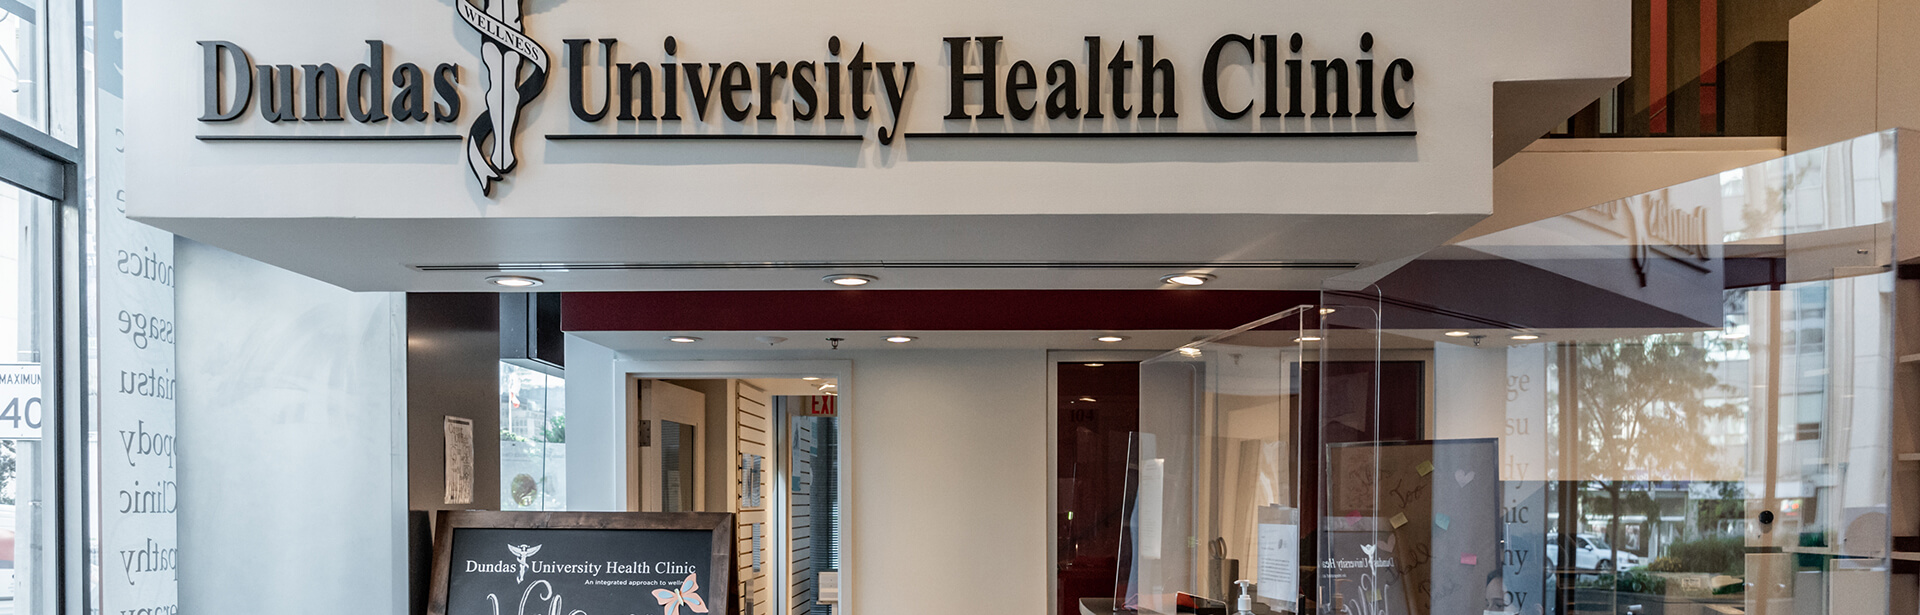 Clinic Tour | Reception Counter | Dundas University Health Clinic